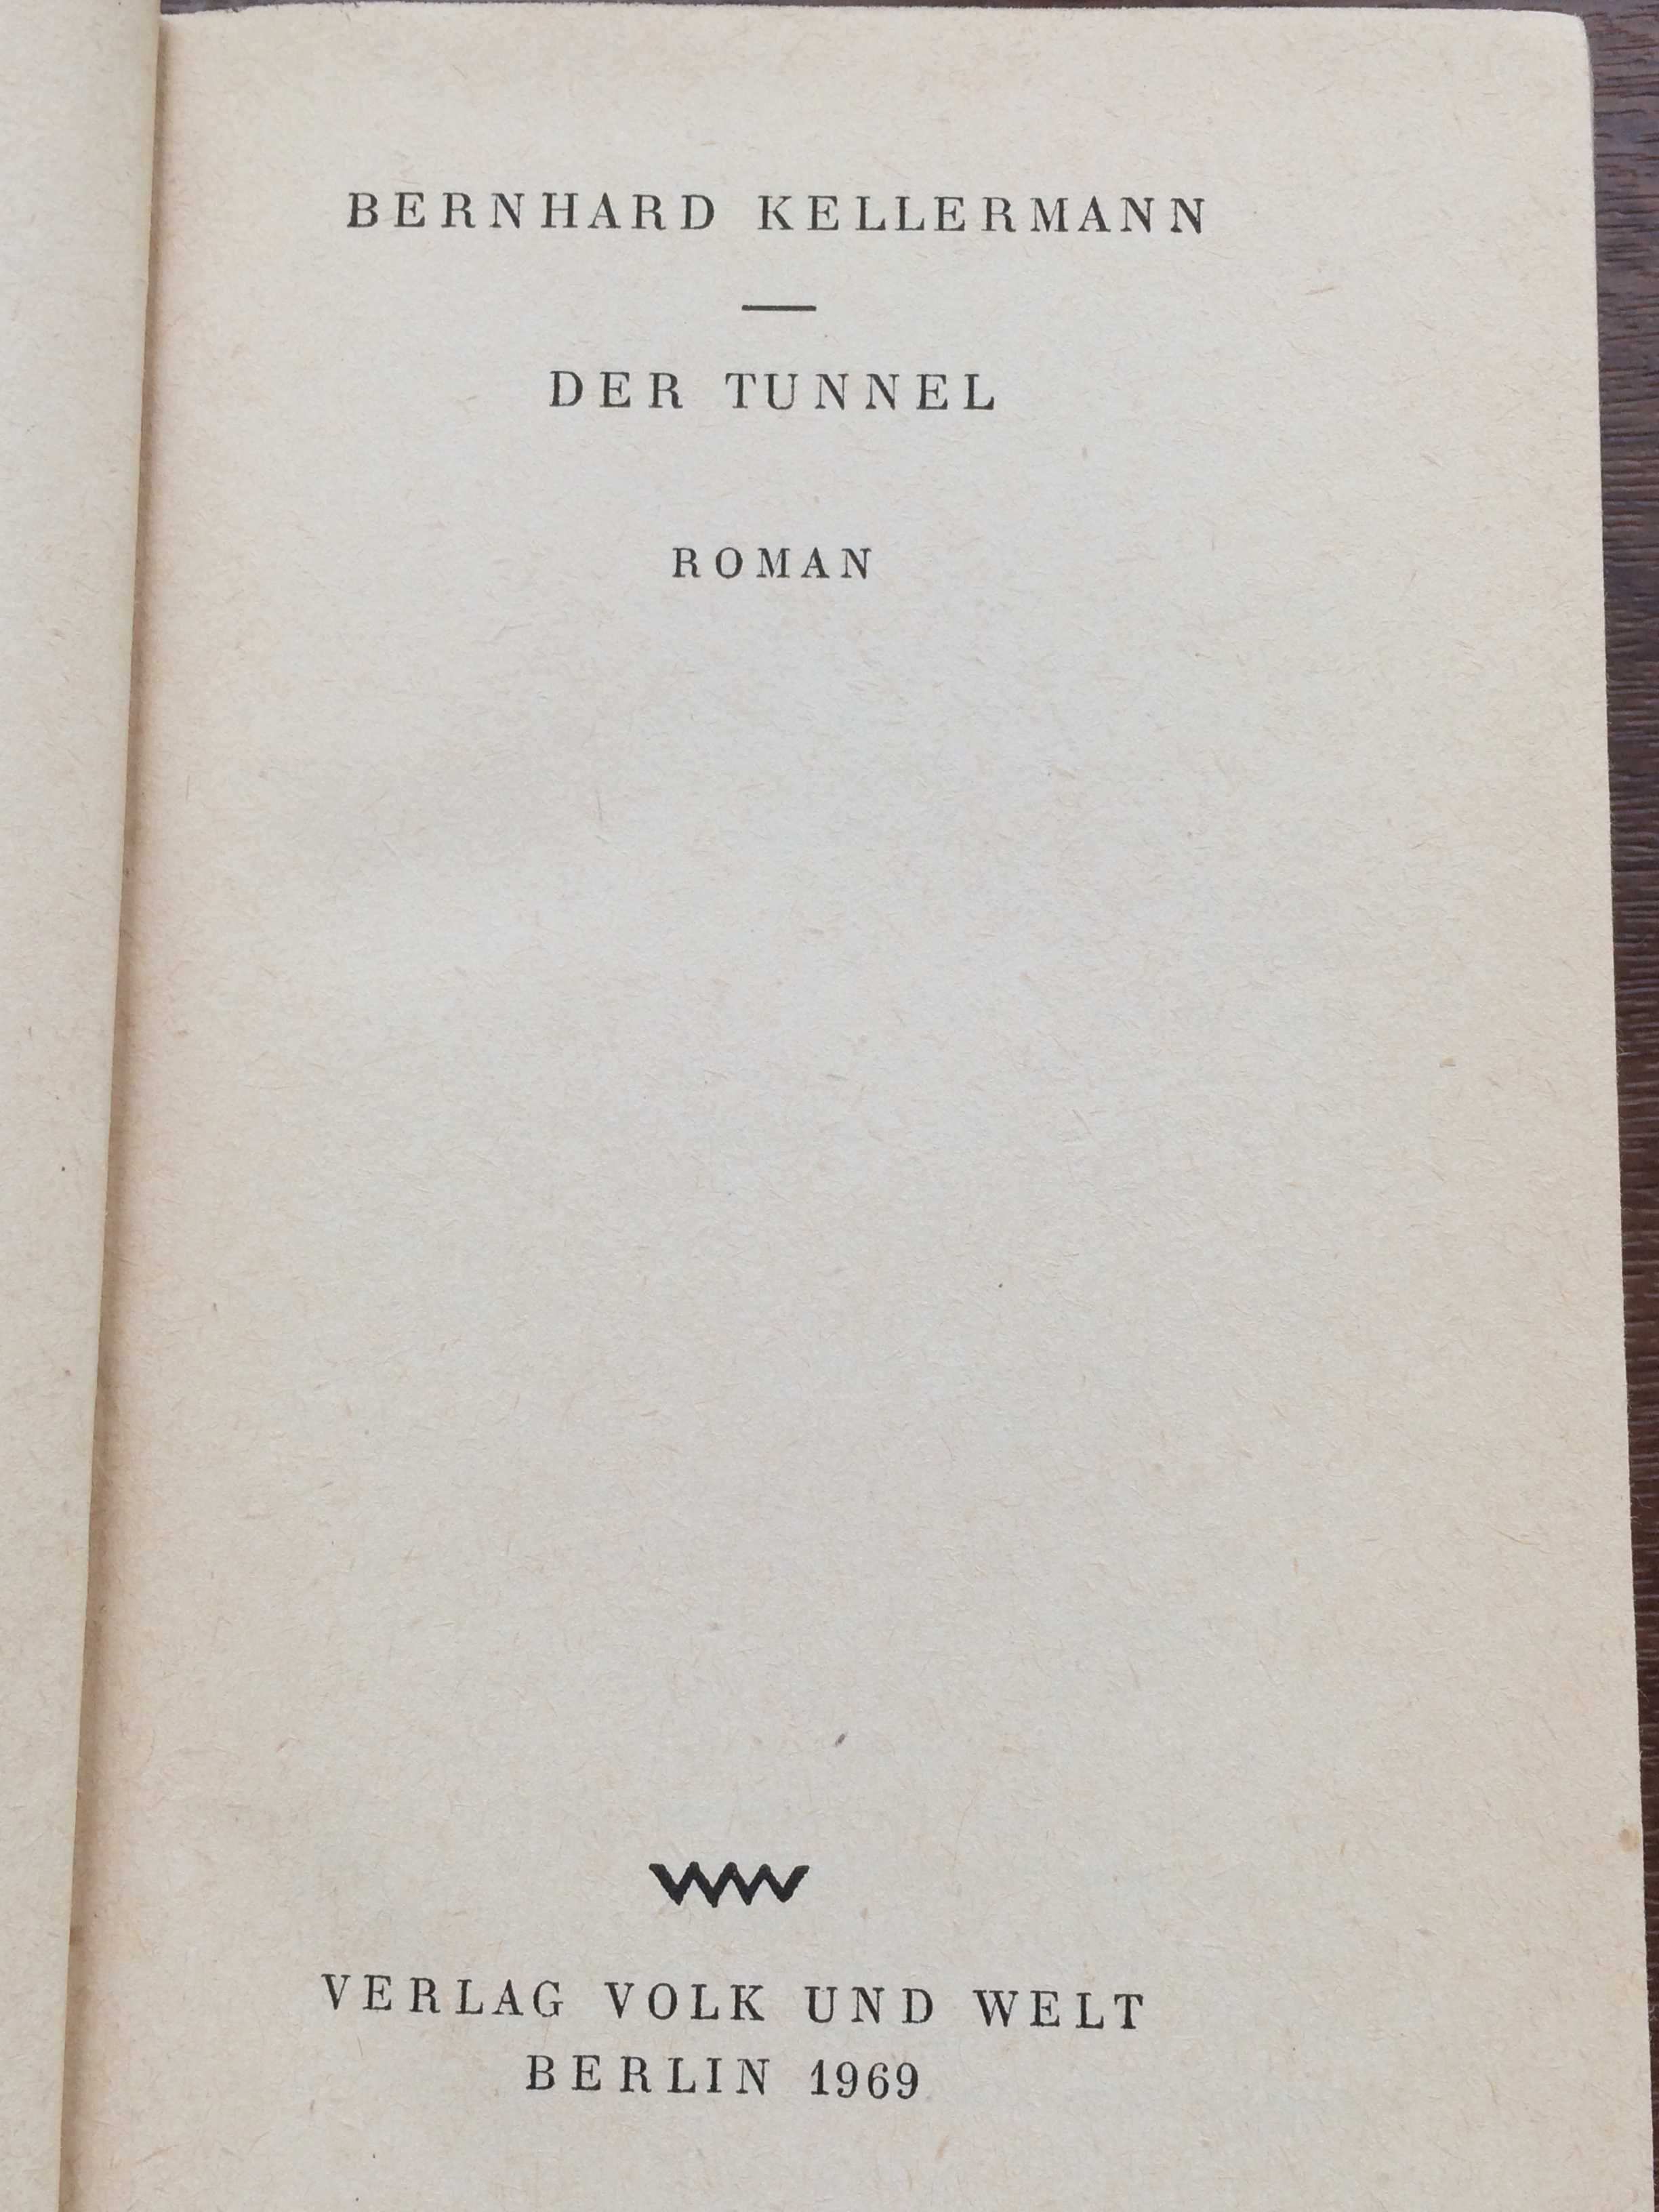 Bernhard Kellermann "Die Stadt Anatol", роман на немецком языке